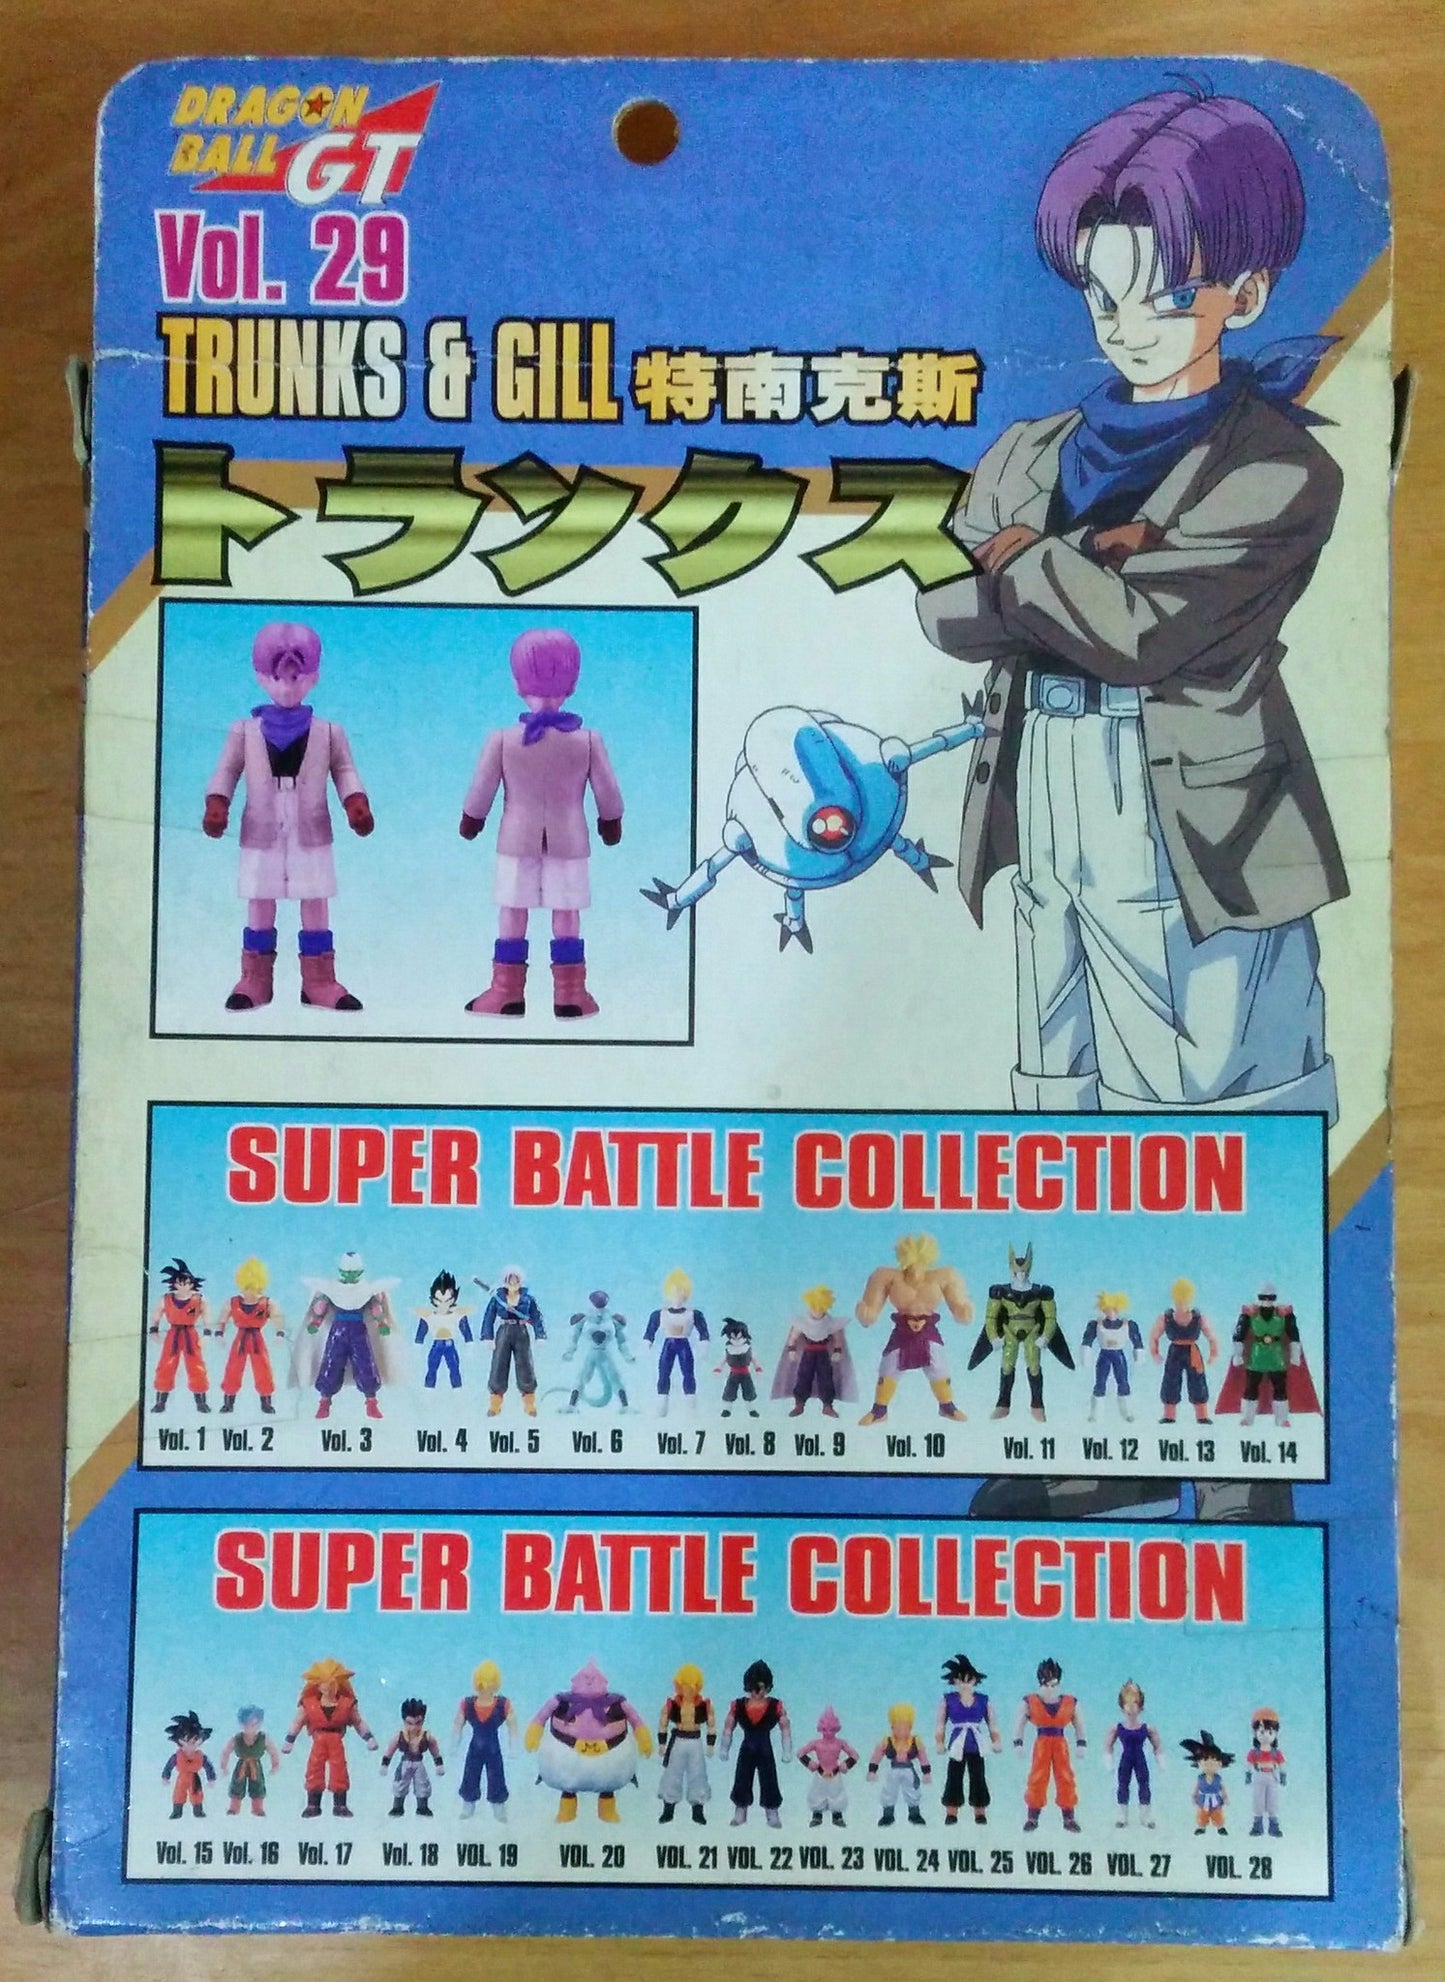 Bandai 1997 Dragon Ball GT Super Battle Collection Vol 29 Trunks & Gill Action Figure - Lavits Figure
 - 2